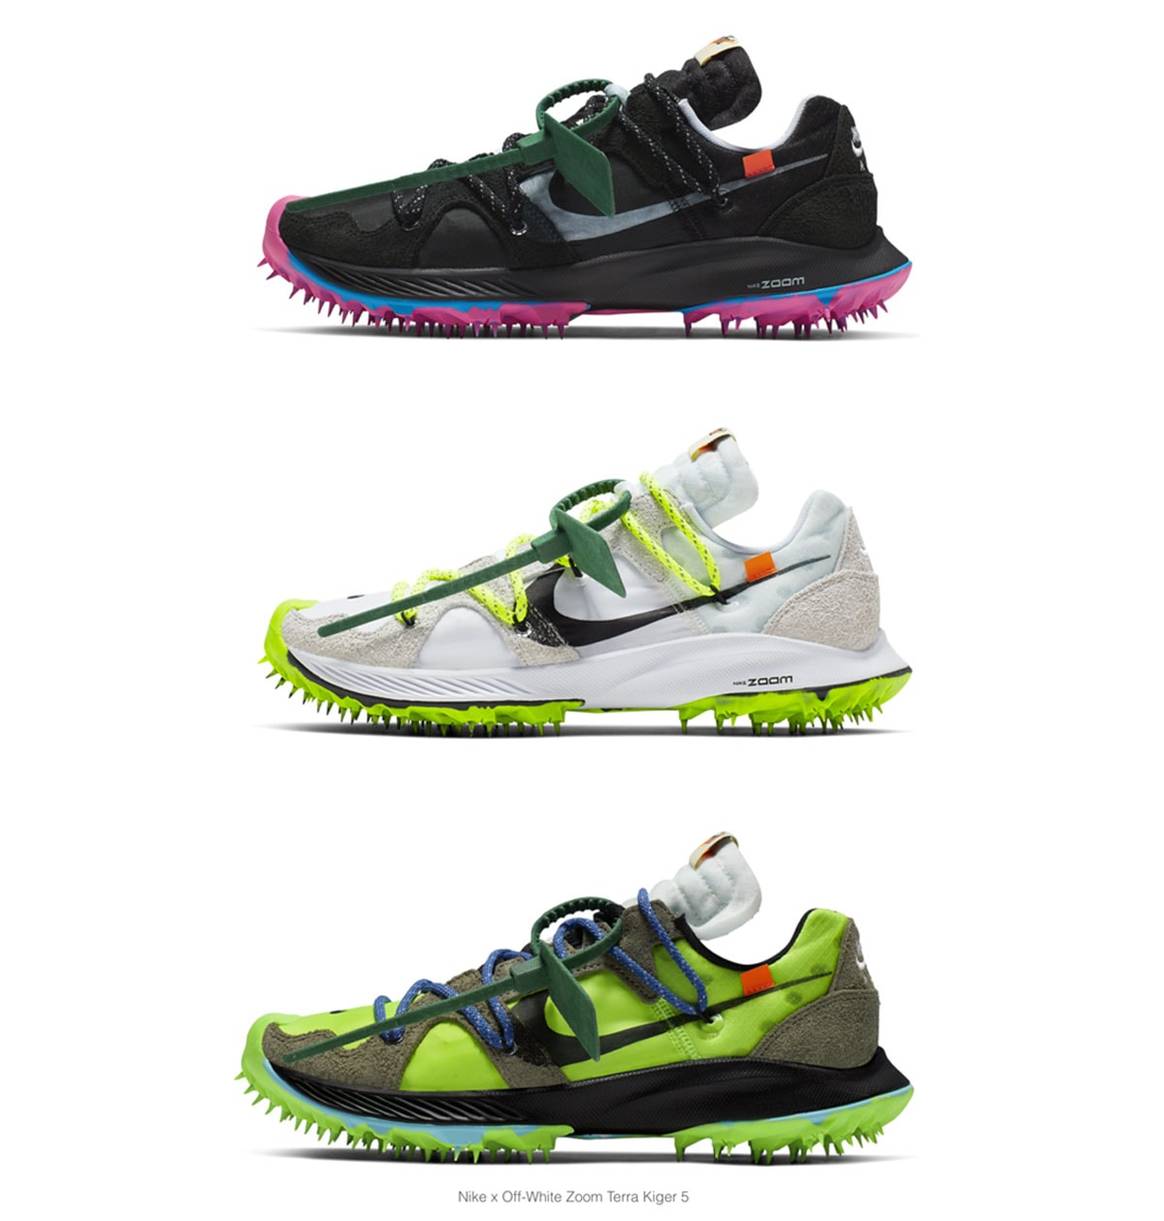 Virgil Abloh & Nike lanceren “Athlete in Progress” Collection